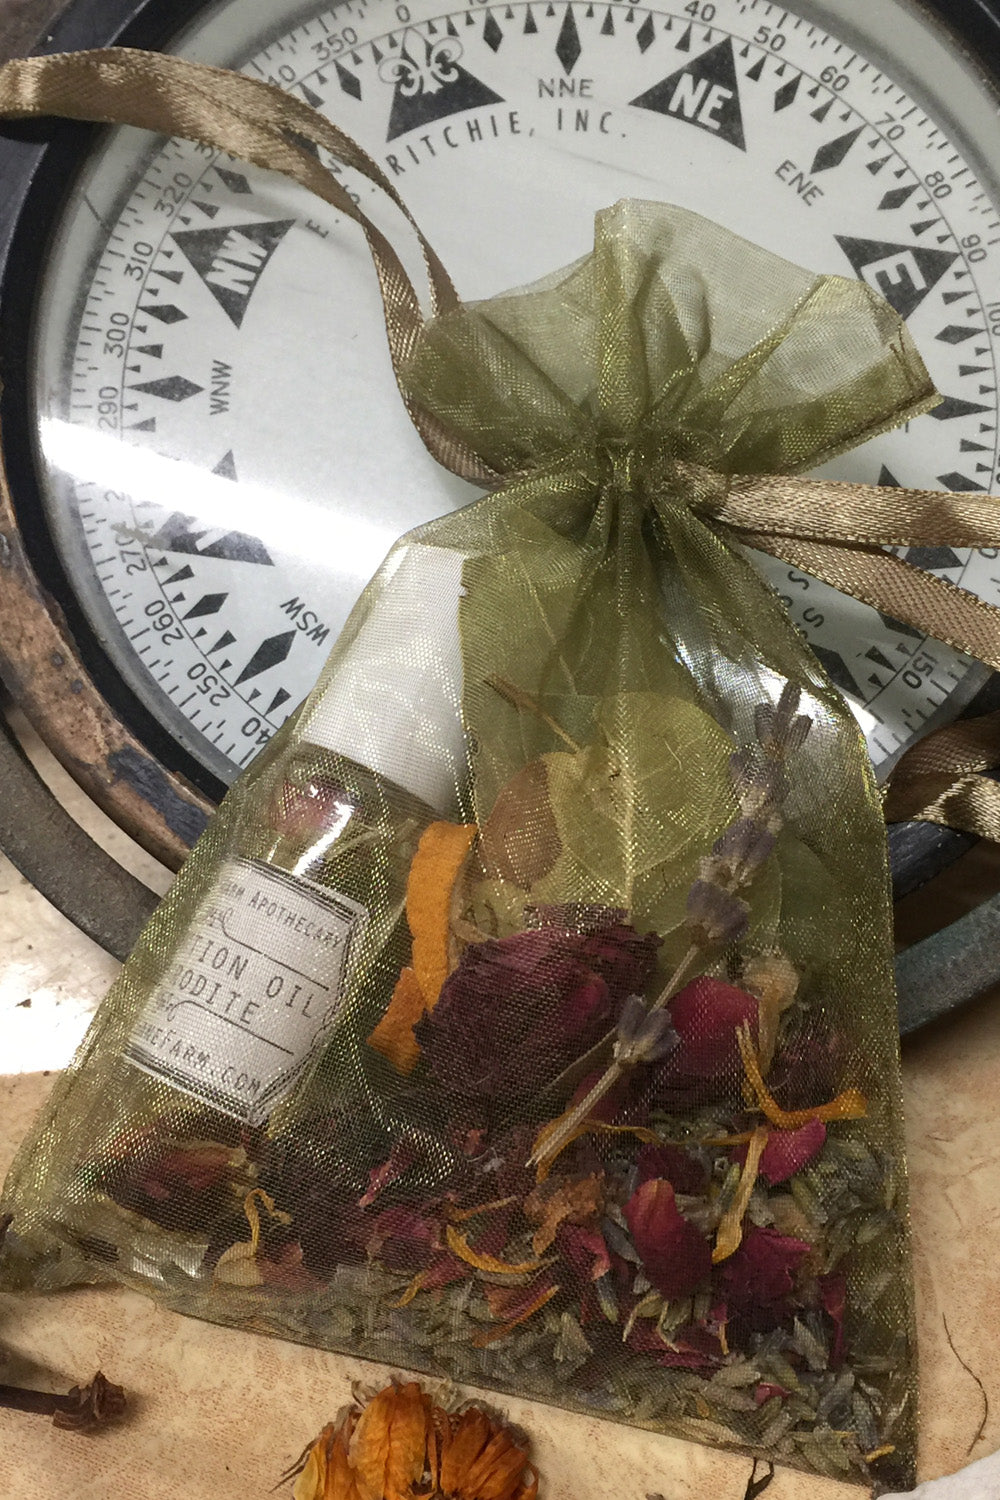 aphrodite intention oil and sachet herb bag